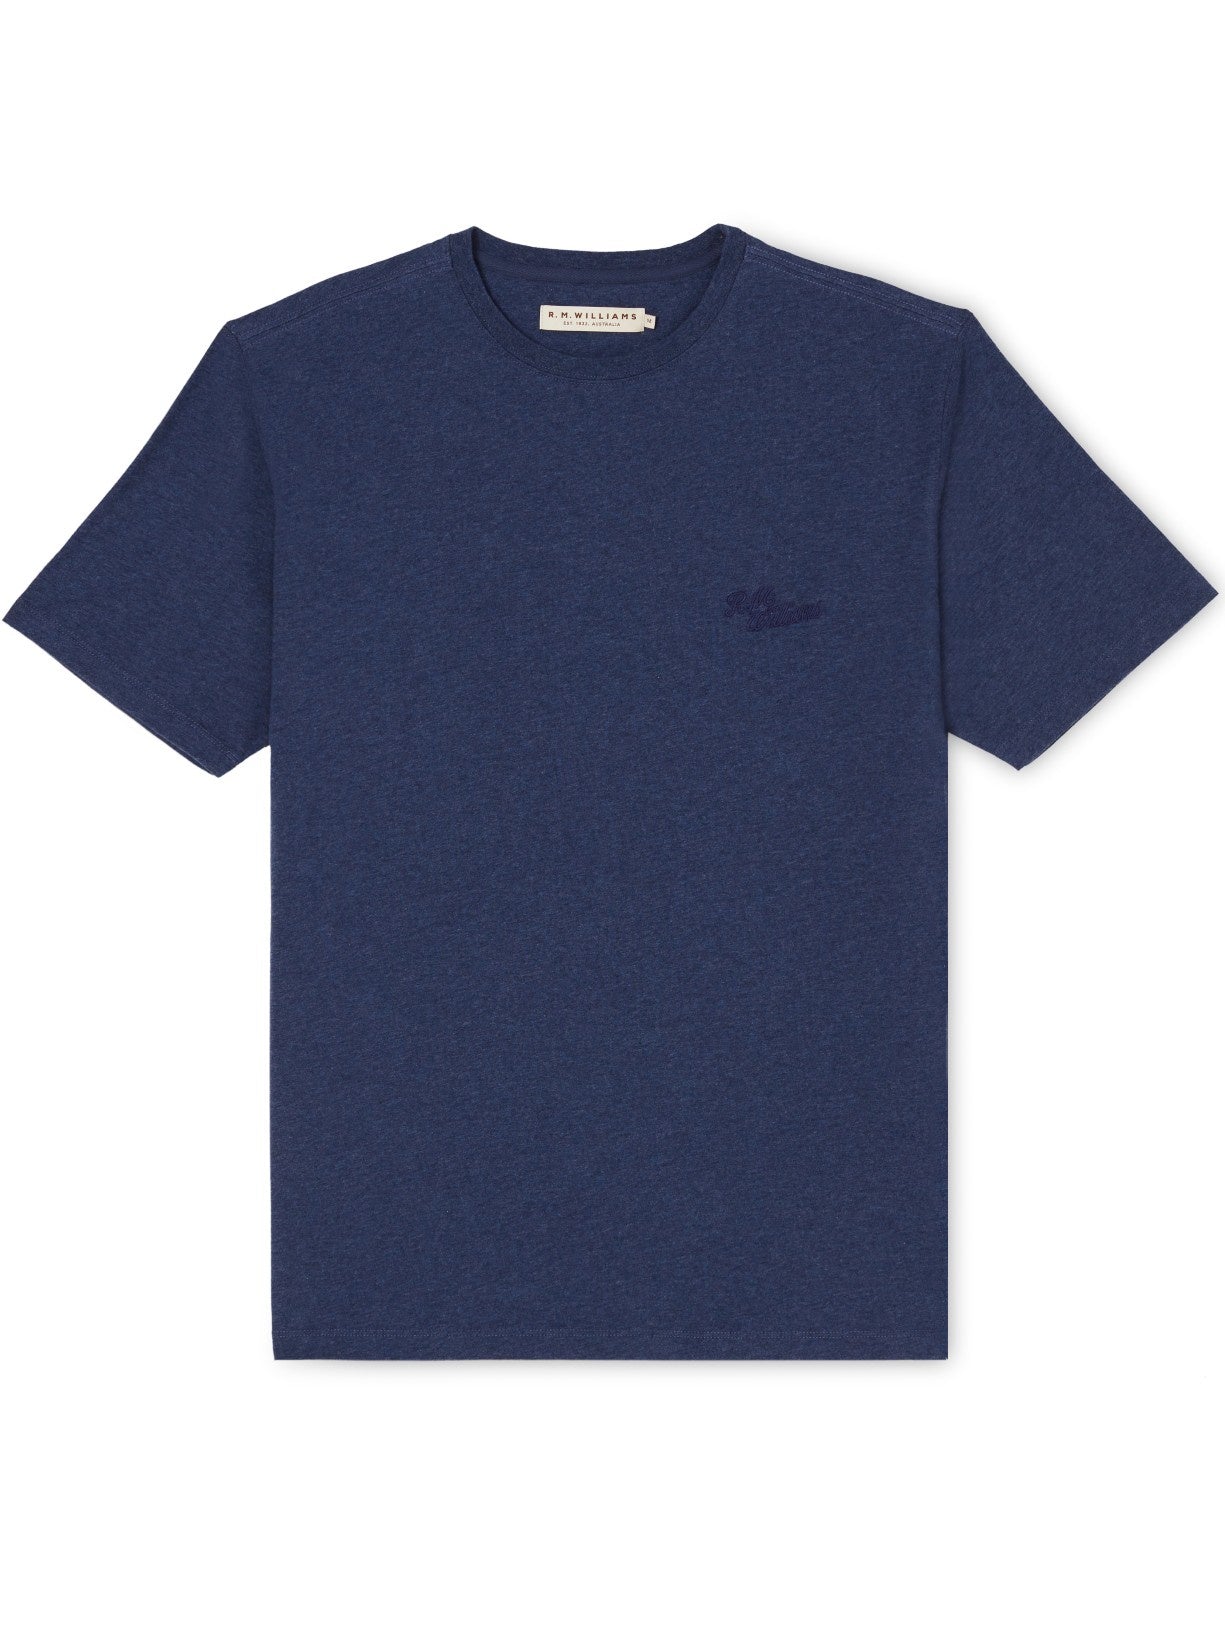 RMW W22 Elliot T-Shirt - Thomson's Suits Ltd - Dark Blue Marle - S - 61152